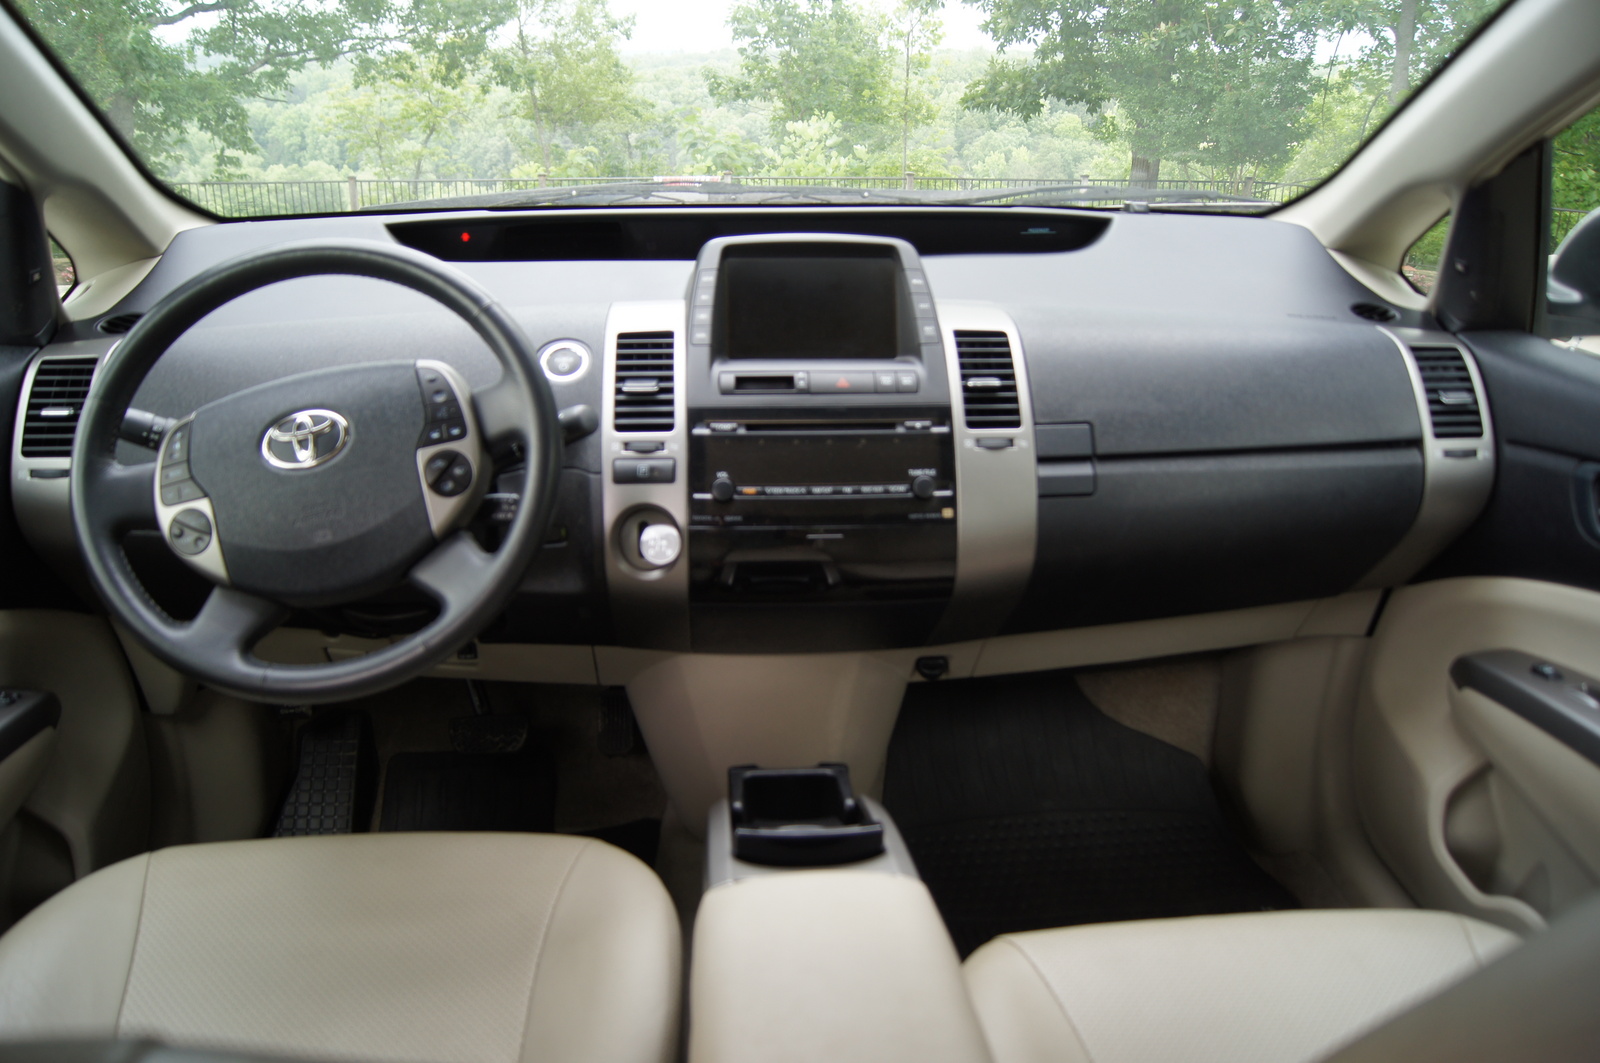 2008 Toyota prius interior photos